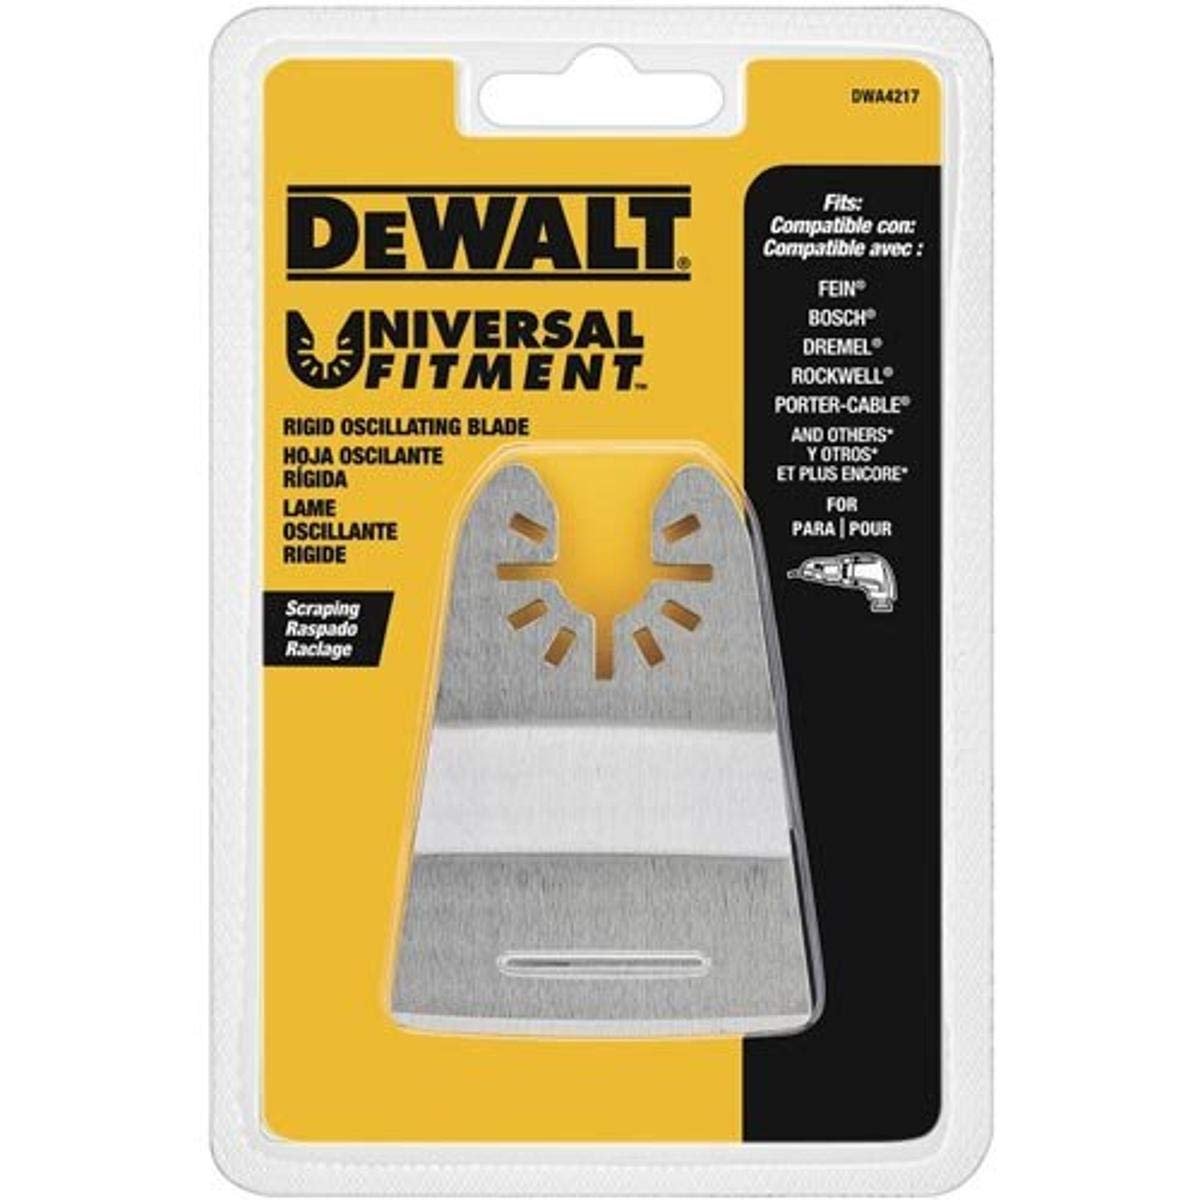 DEWALT Oscillating Tool Blade, Rigid Scraper (DWA4217) Review